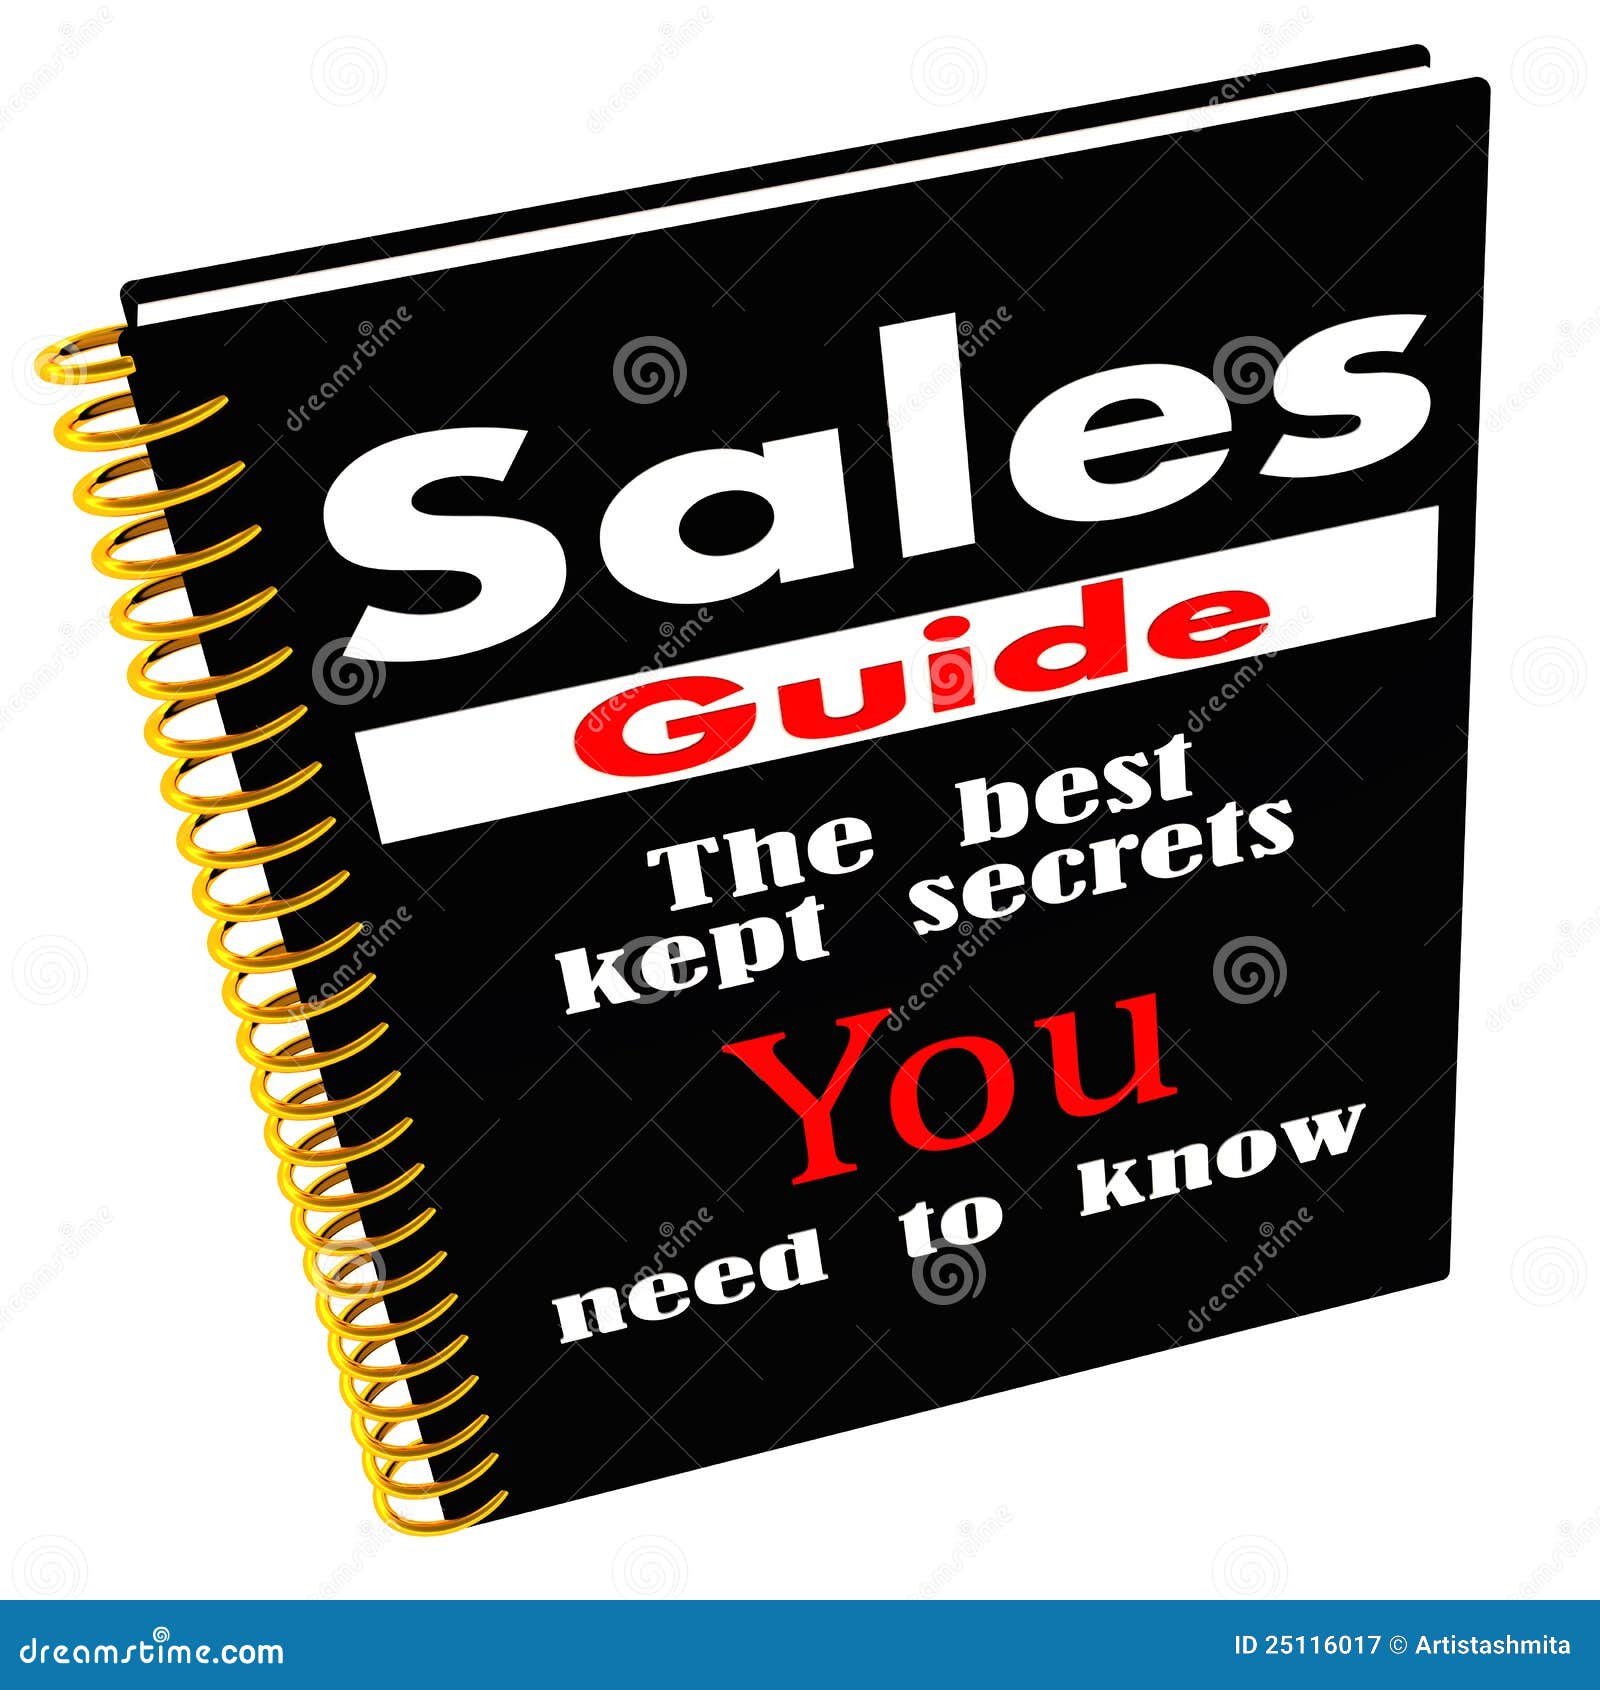 sales guide of secrets